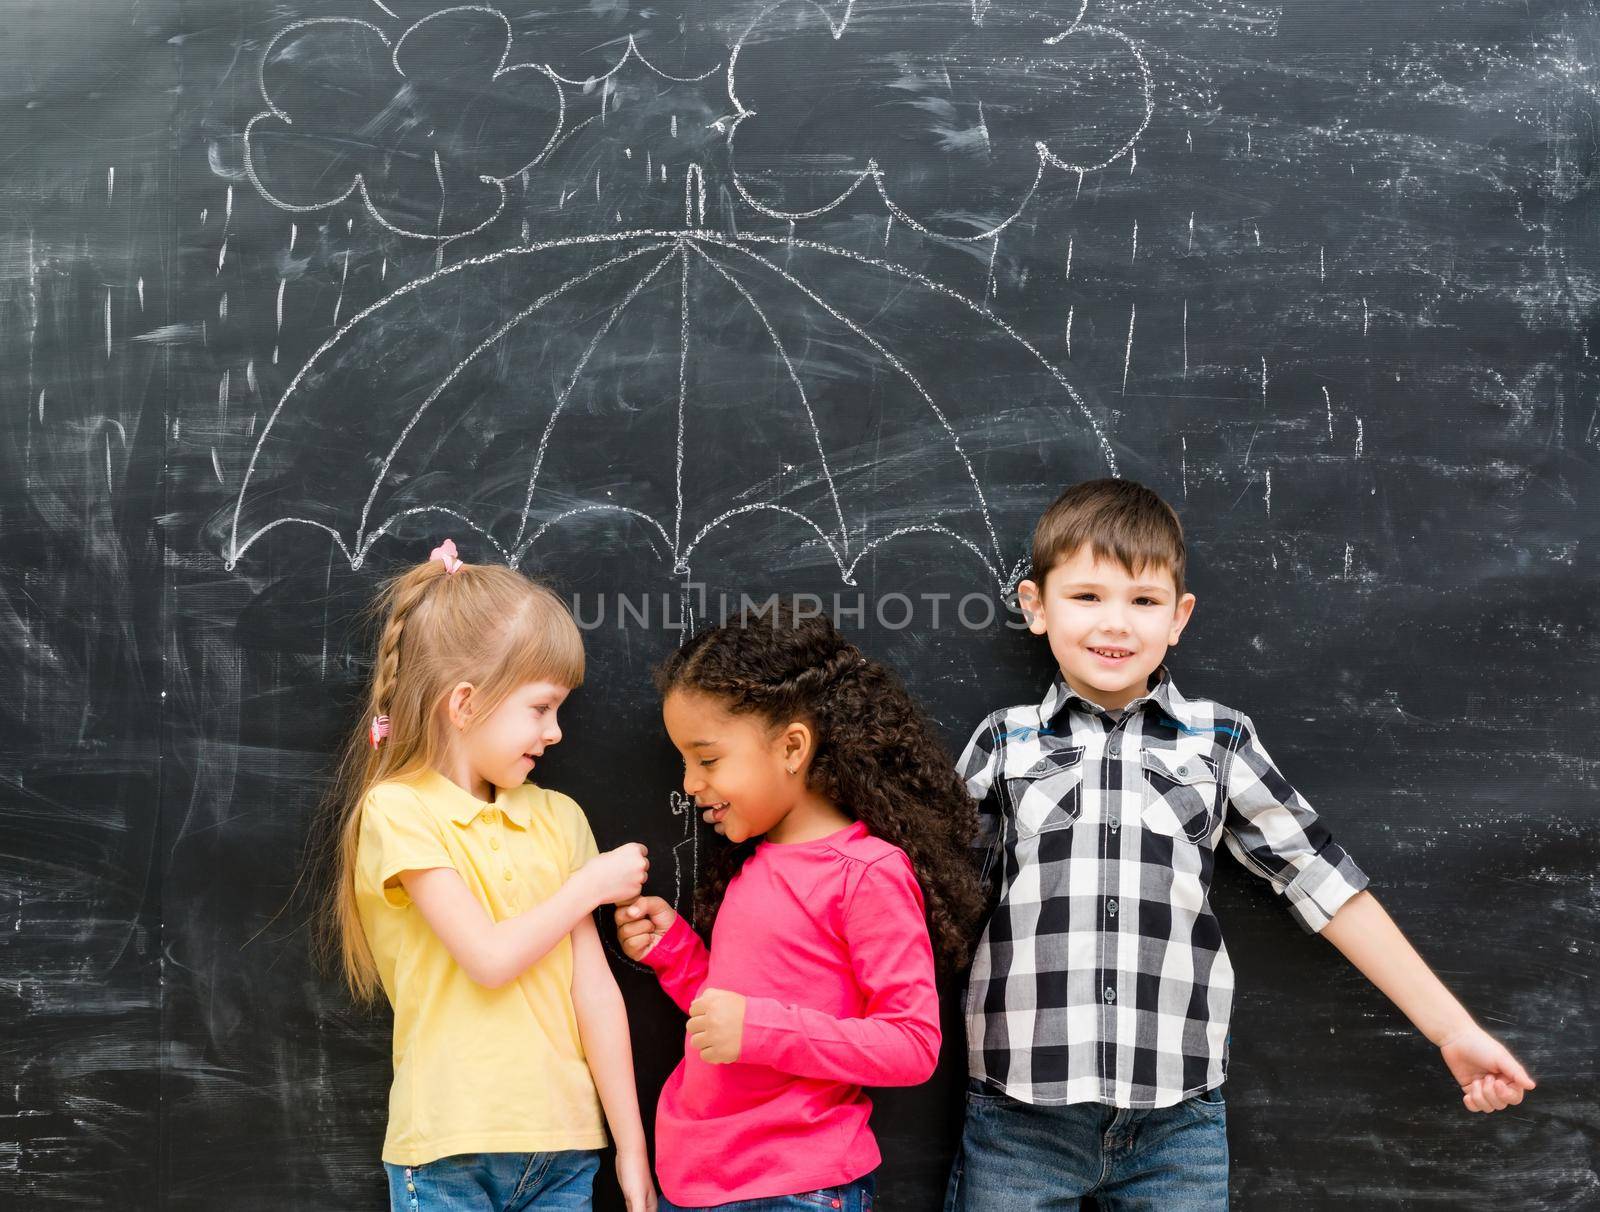 three funny children with umbrella drawn on the blackboard by GekaSkr